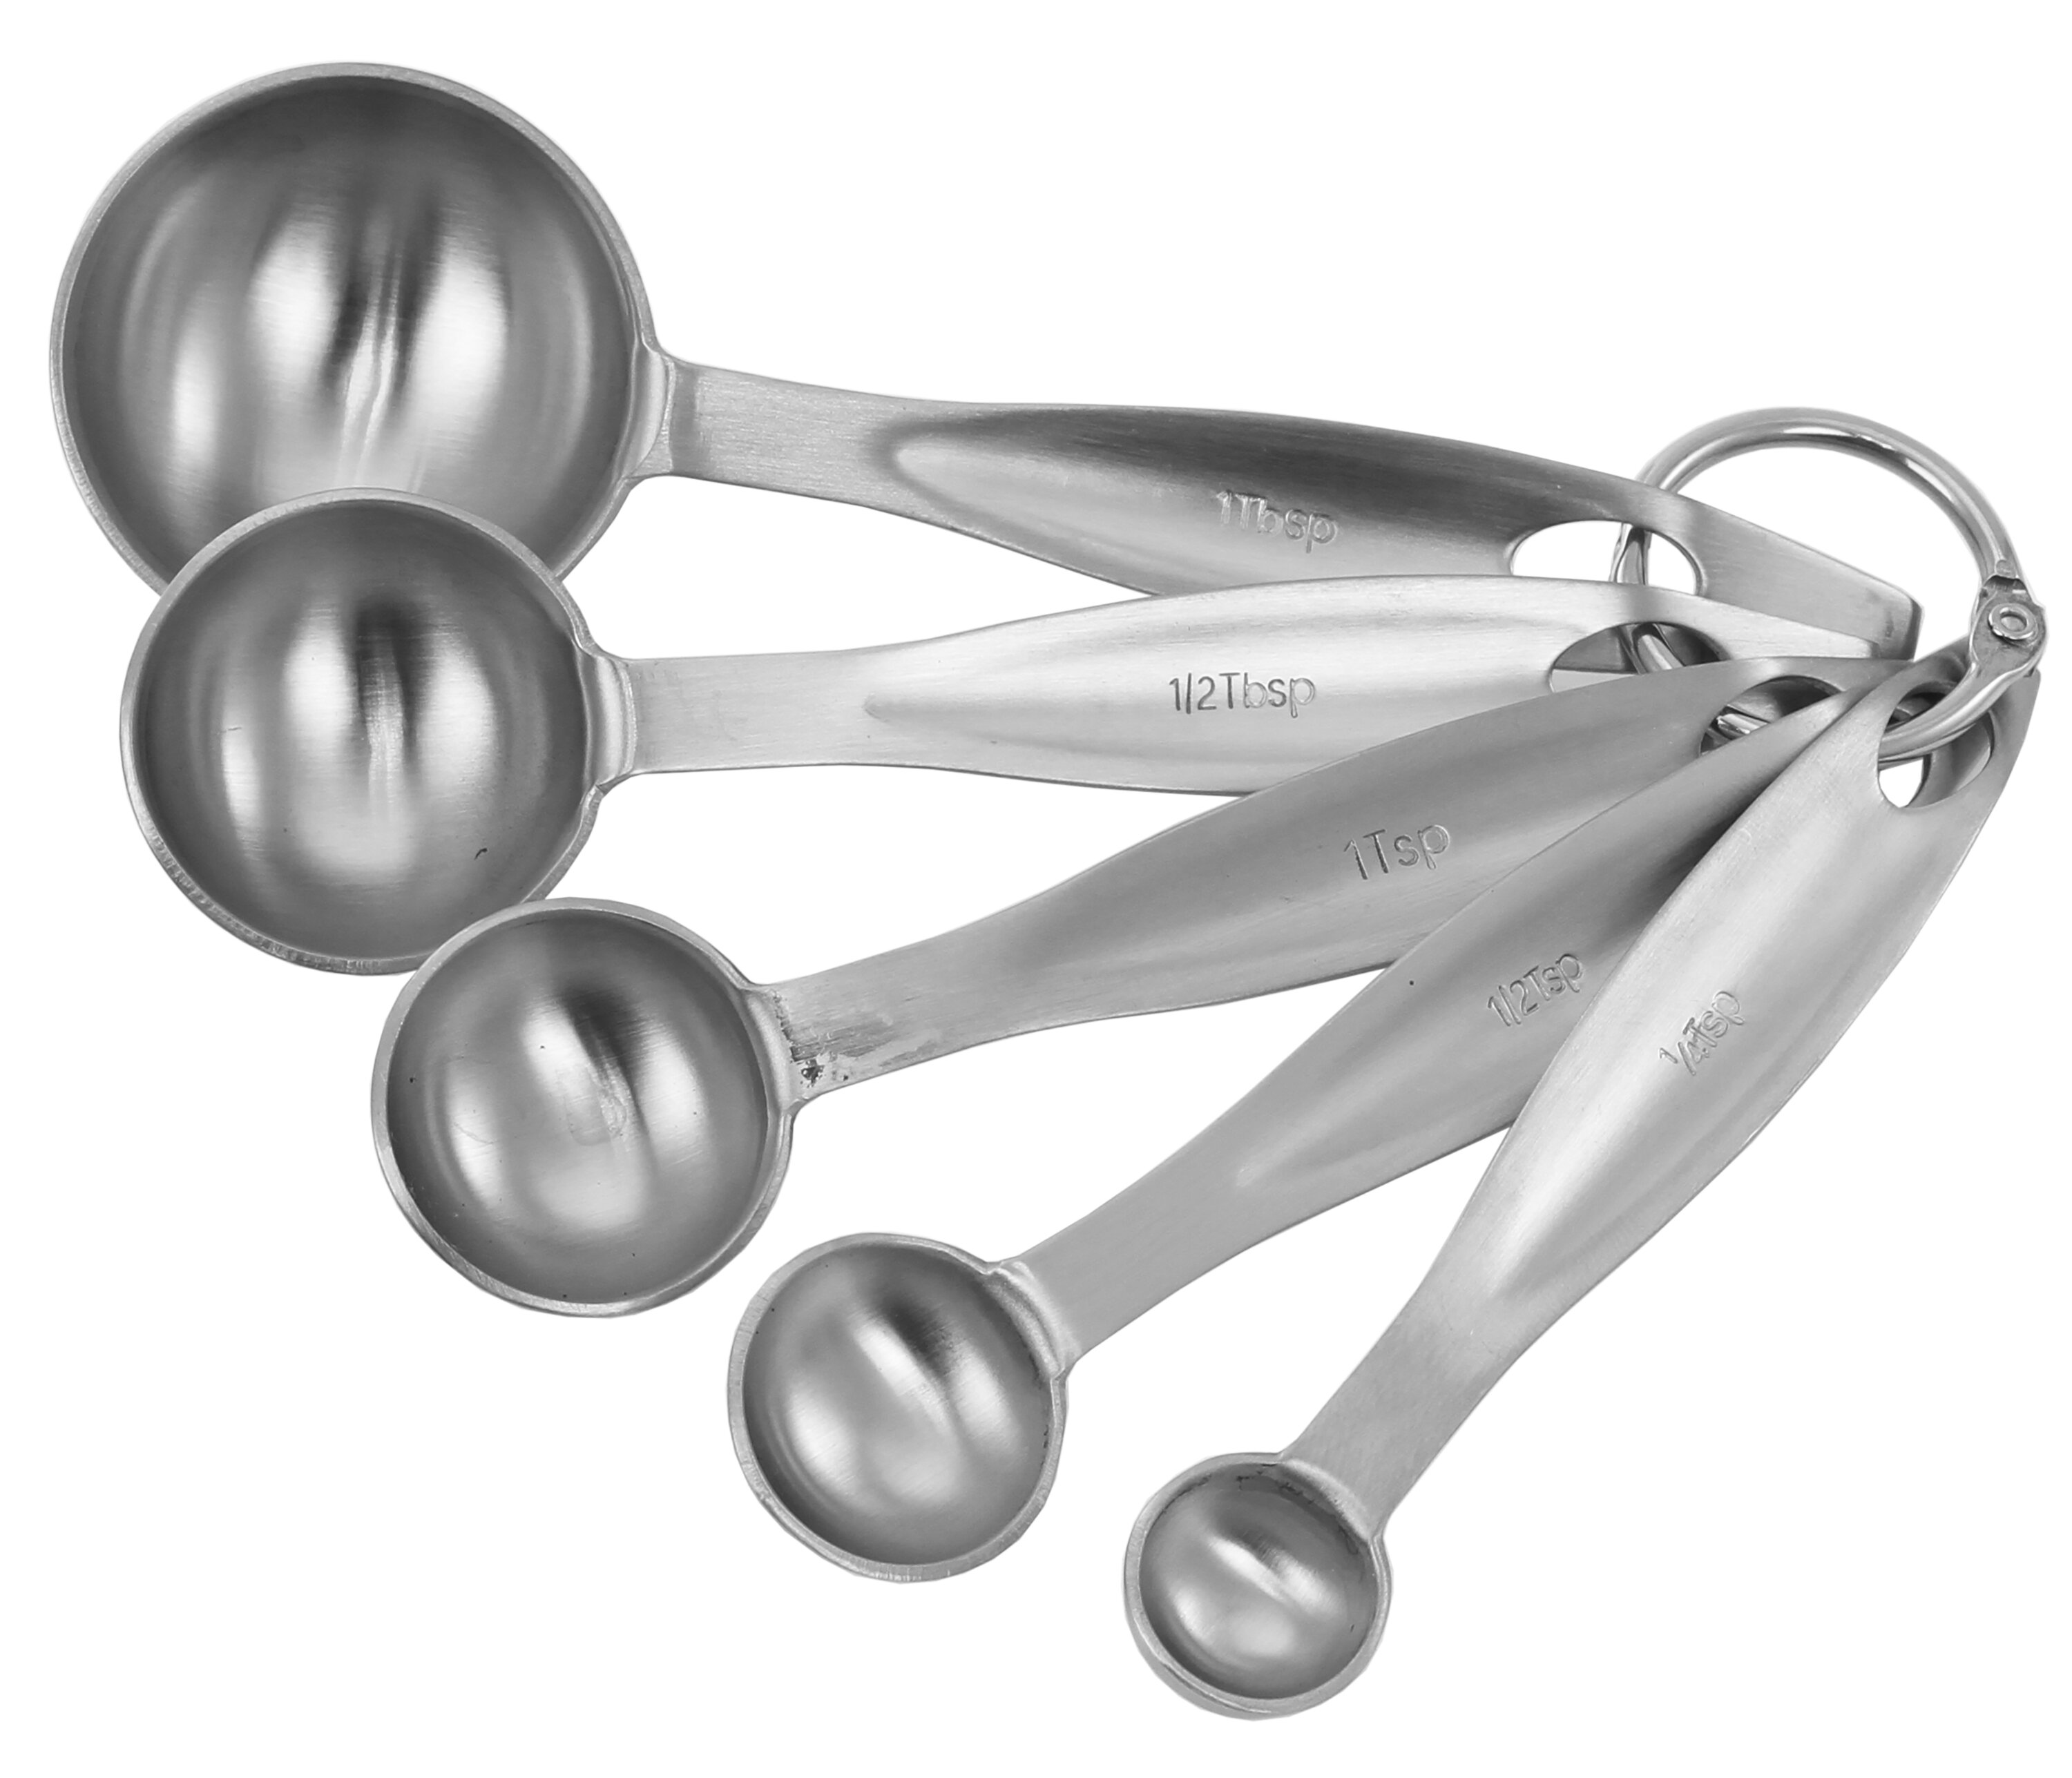 2x Measuring Spoons Set Teaspoon Tablespoon Measurements Set Kit Kitchen Tools